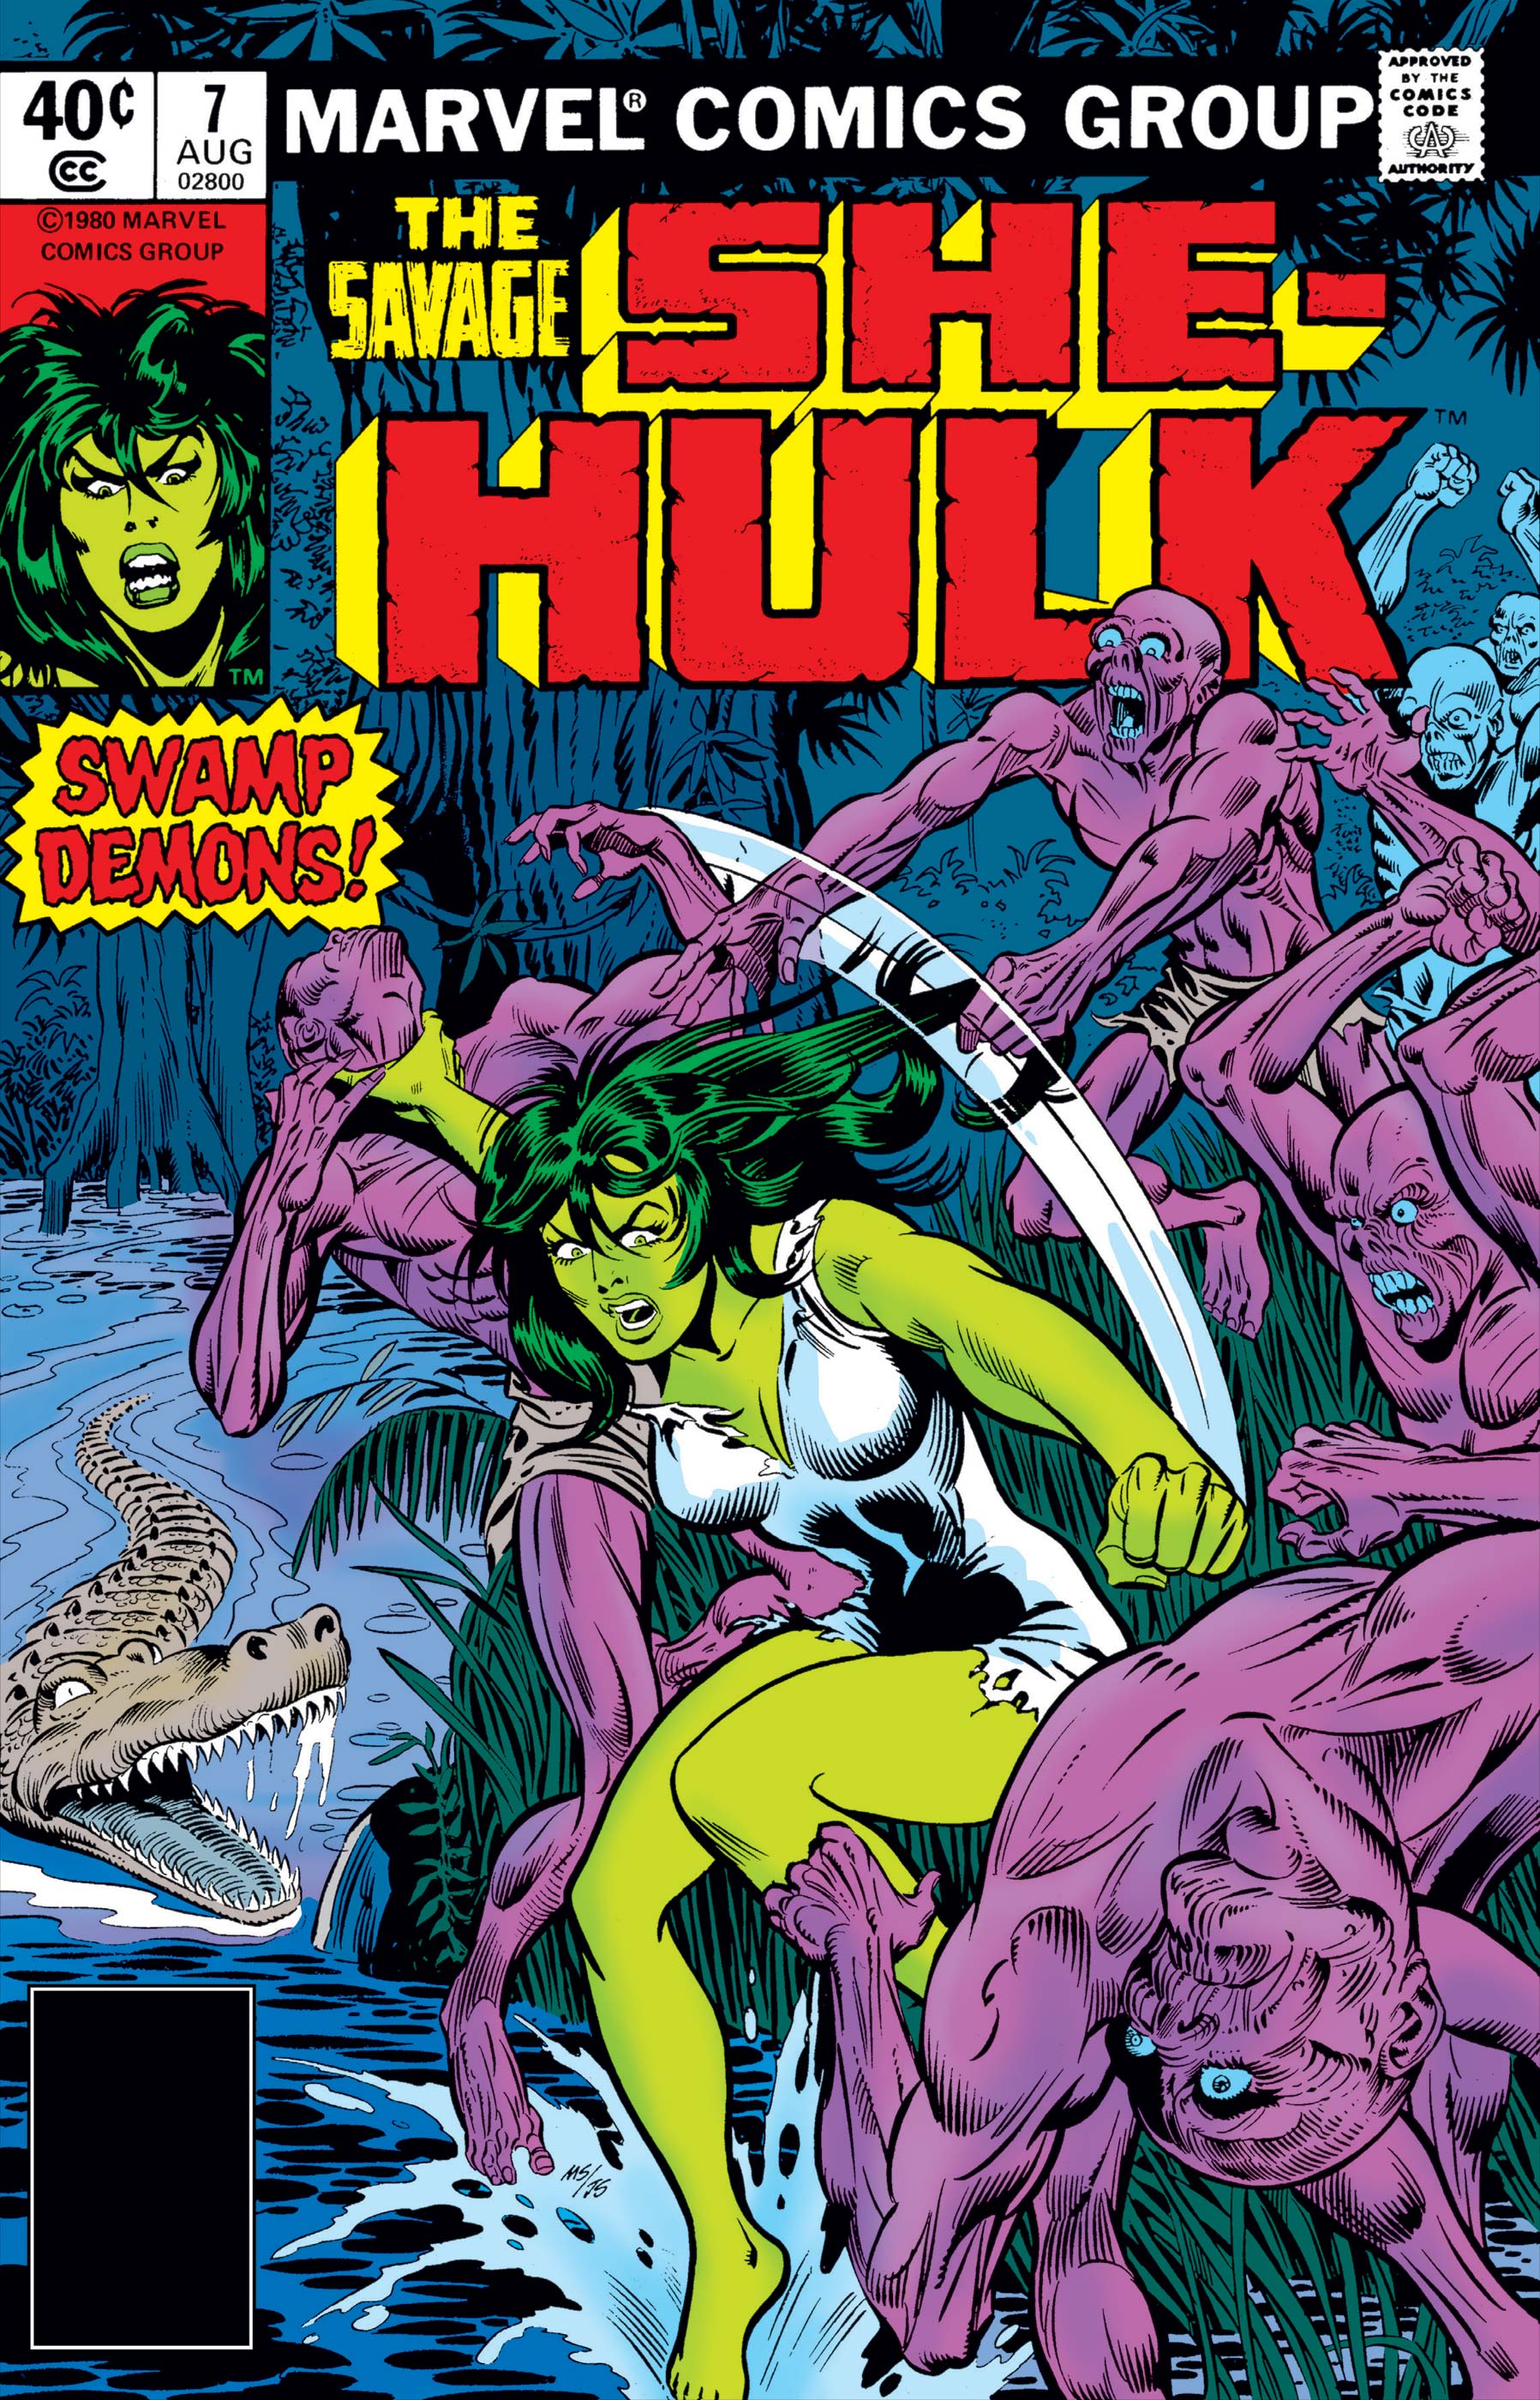 The Savage She-Hulk (1980) #7